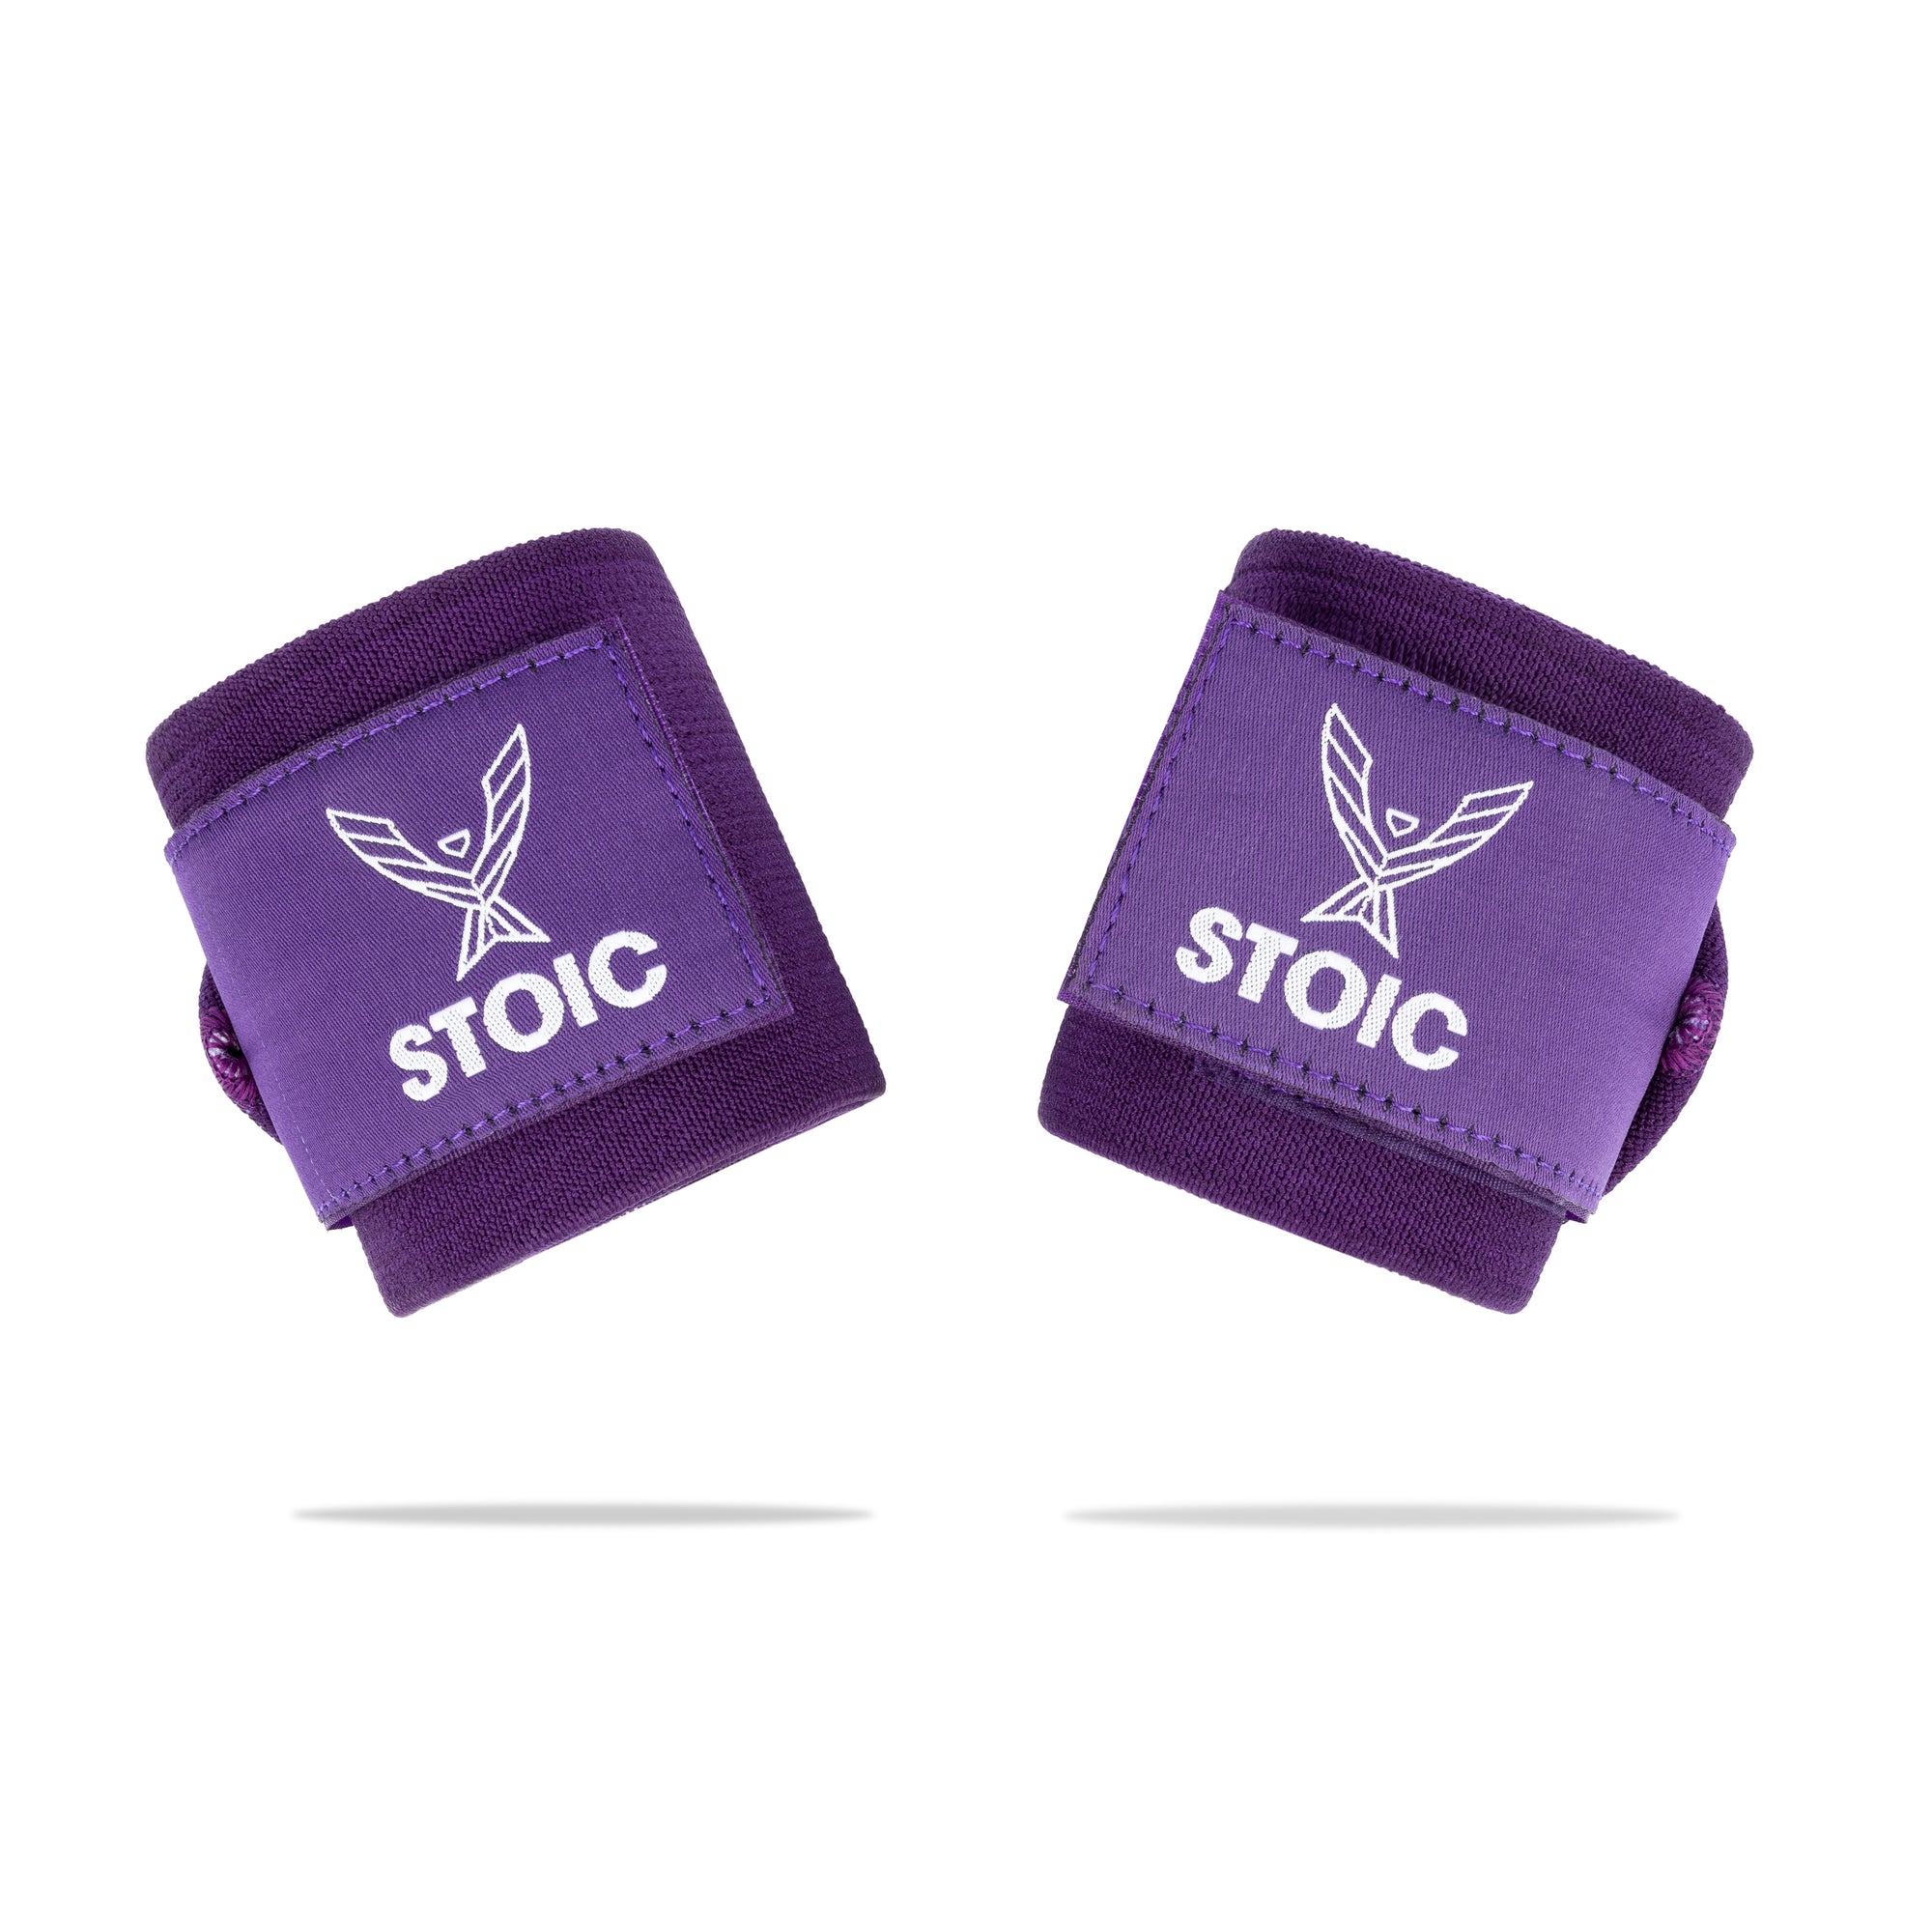 Stoic Wrist Wraps - Purple